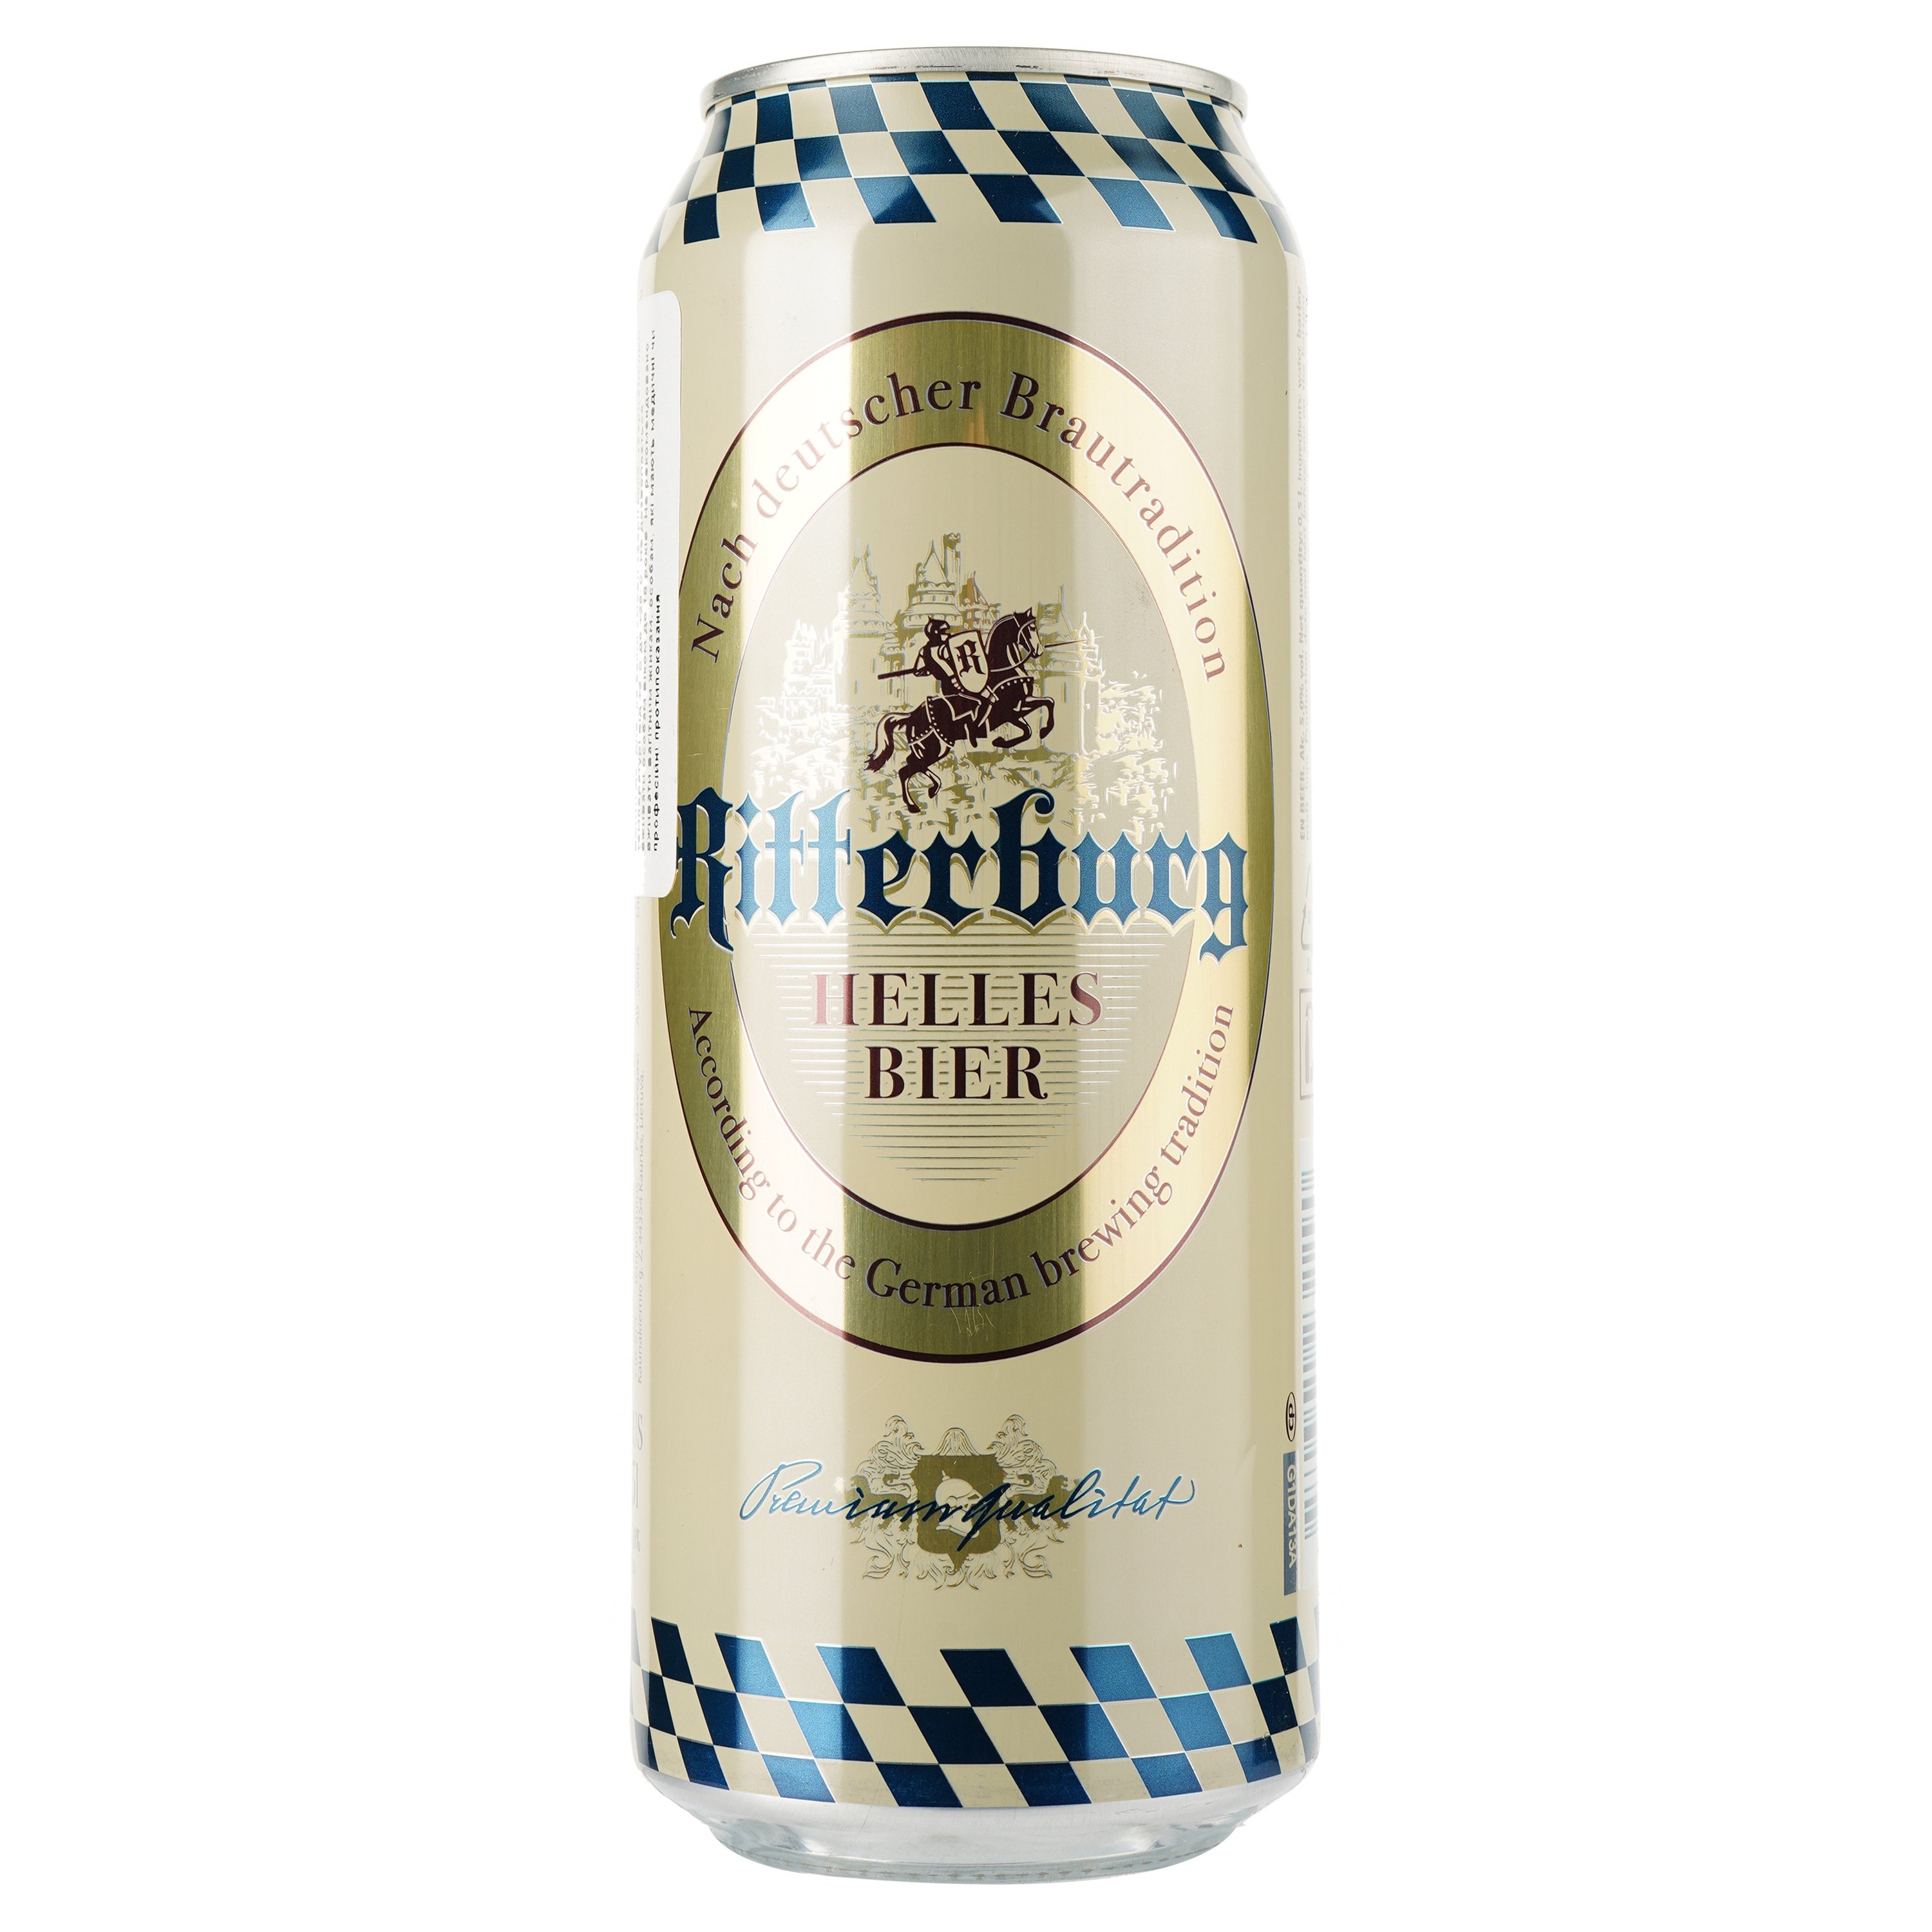 Пиво Ritterburg светлое, 5%, ж/б, 0.5 л - фото 1